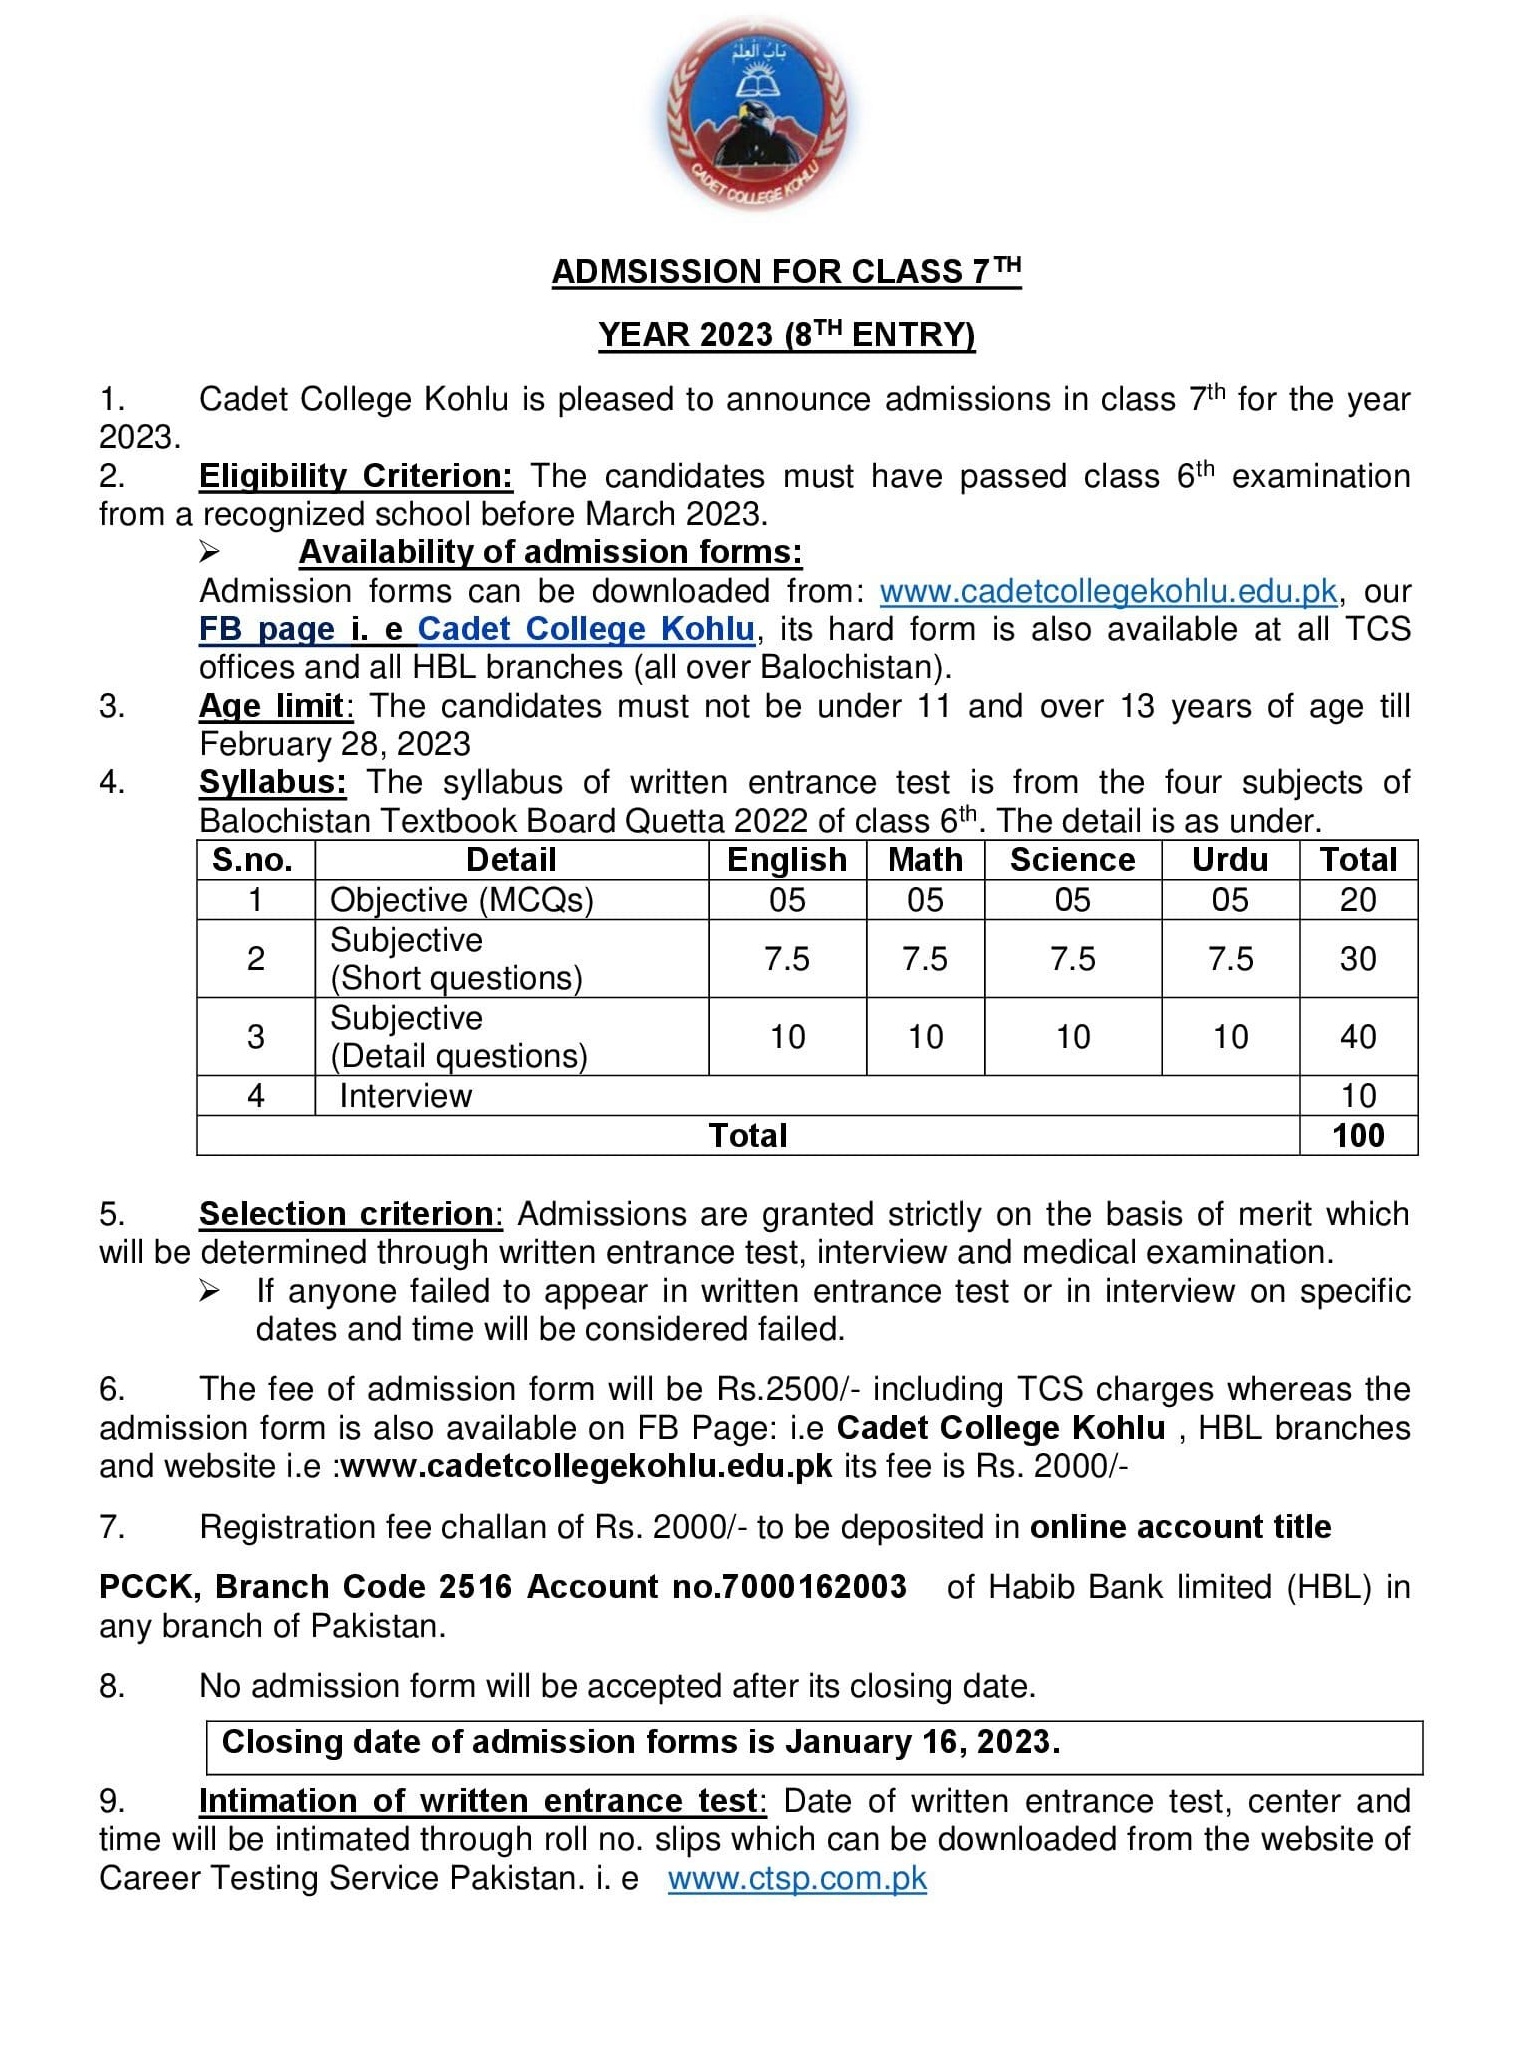 CTSP Roll No Slip of Cadet College Kohlu Admission 2024 Merit List Test Schedule